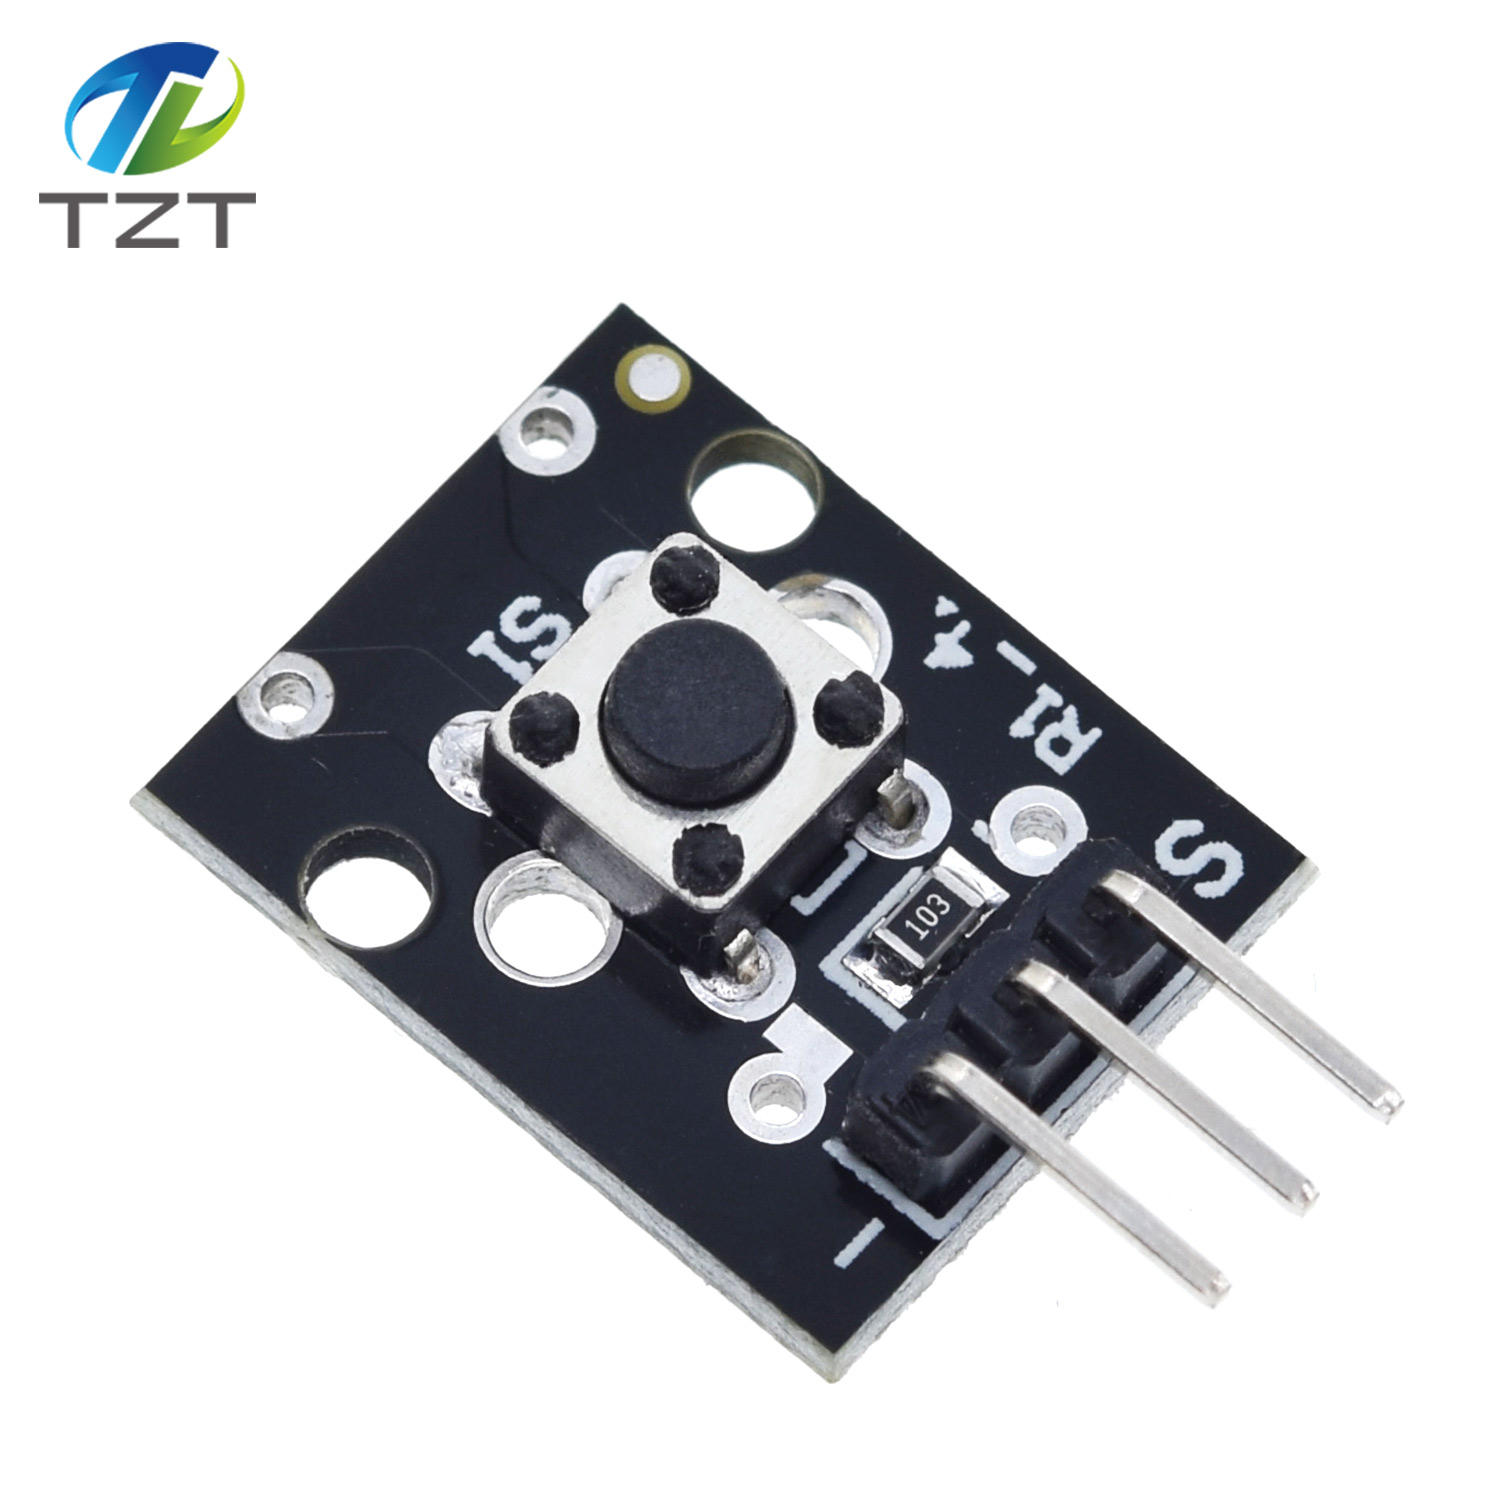 TZT  KY-004 3pin Button Key Switch Sensor Module for Arduino Diy Starter Kit 6*6*5mm 6x6x5mm KY004